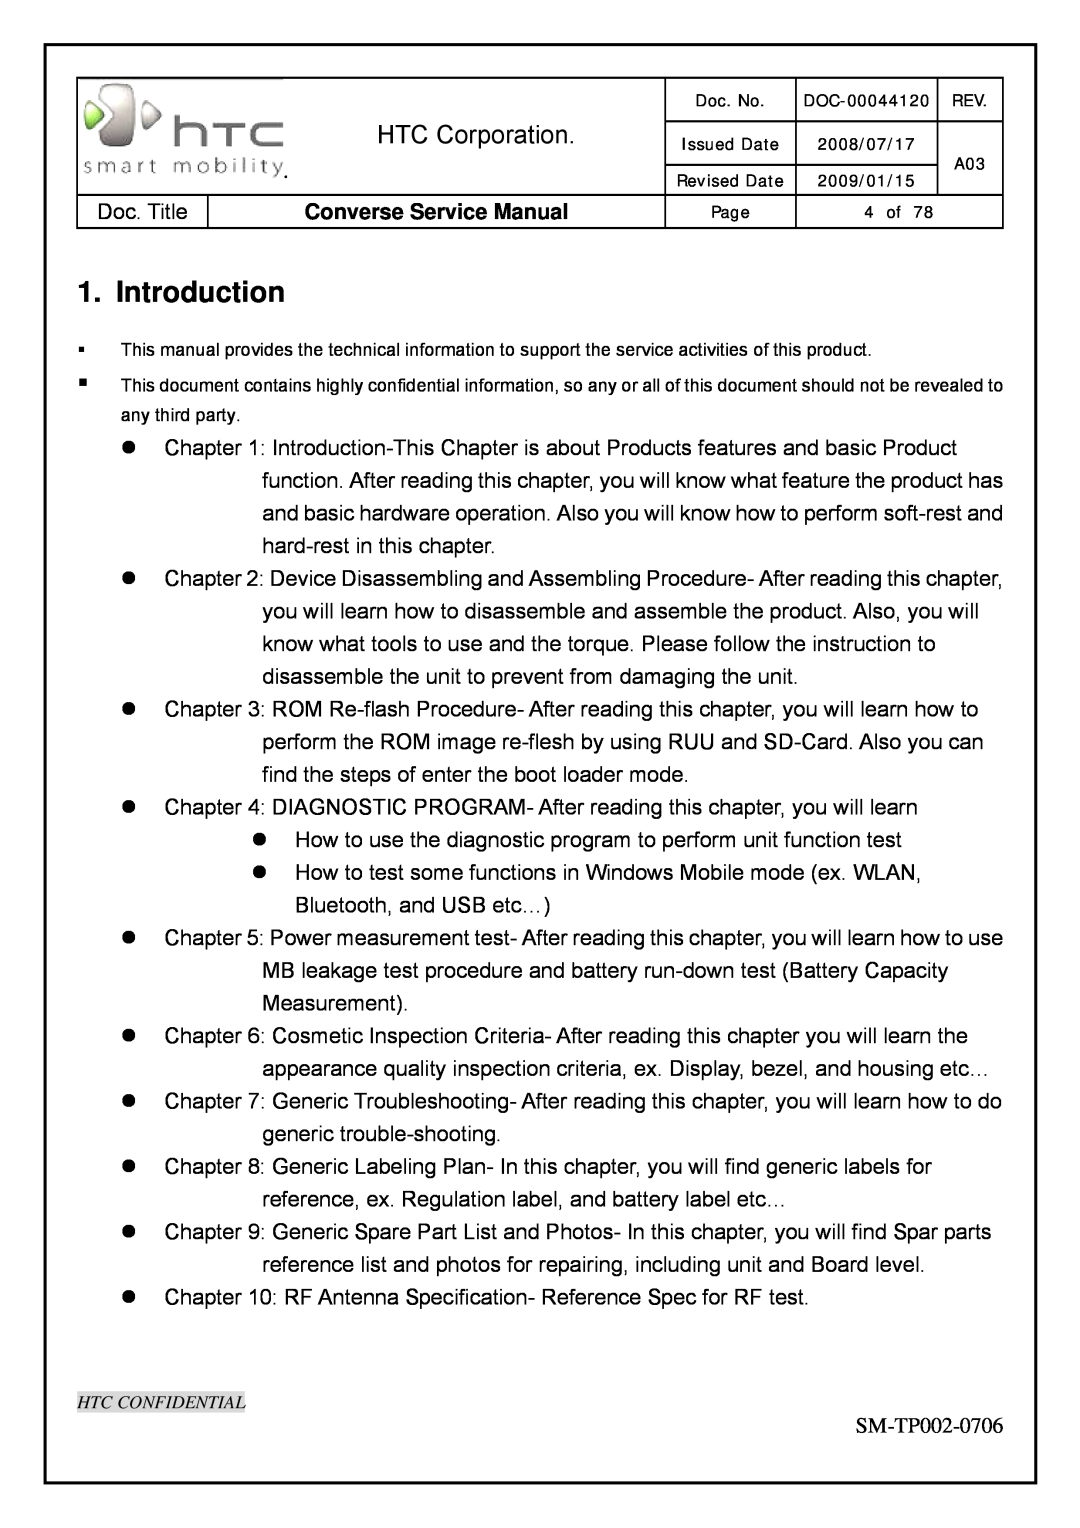 HTC SM-TP002-0706 service manual Introduction, HTC Corporation, Converse Service Manual 